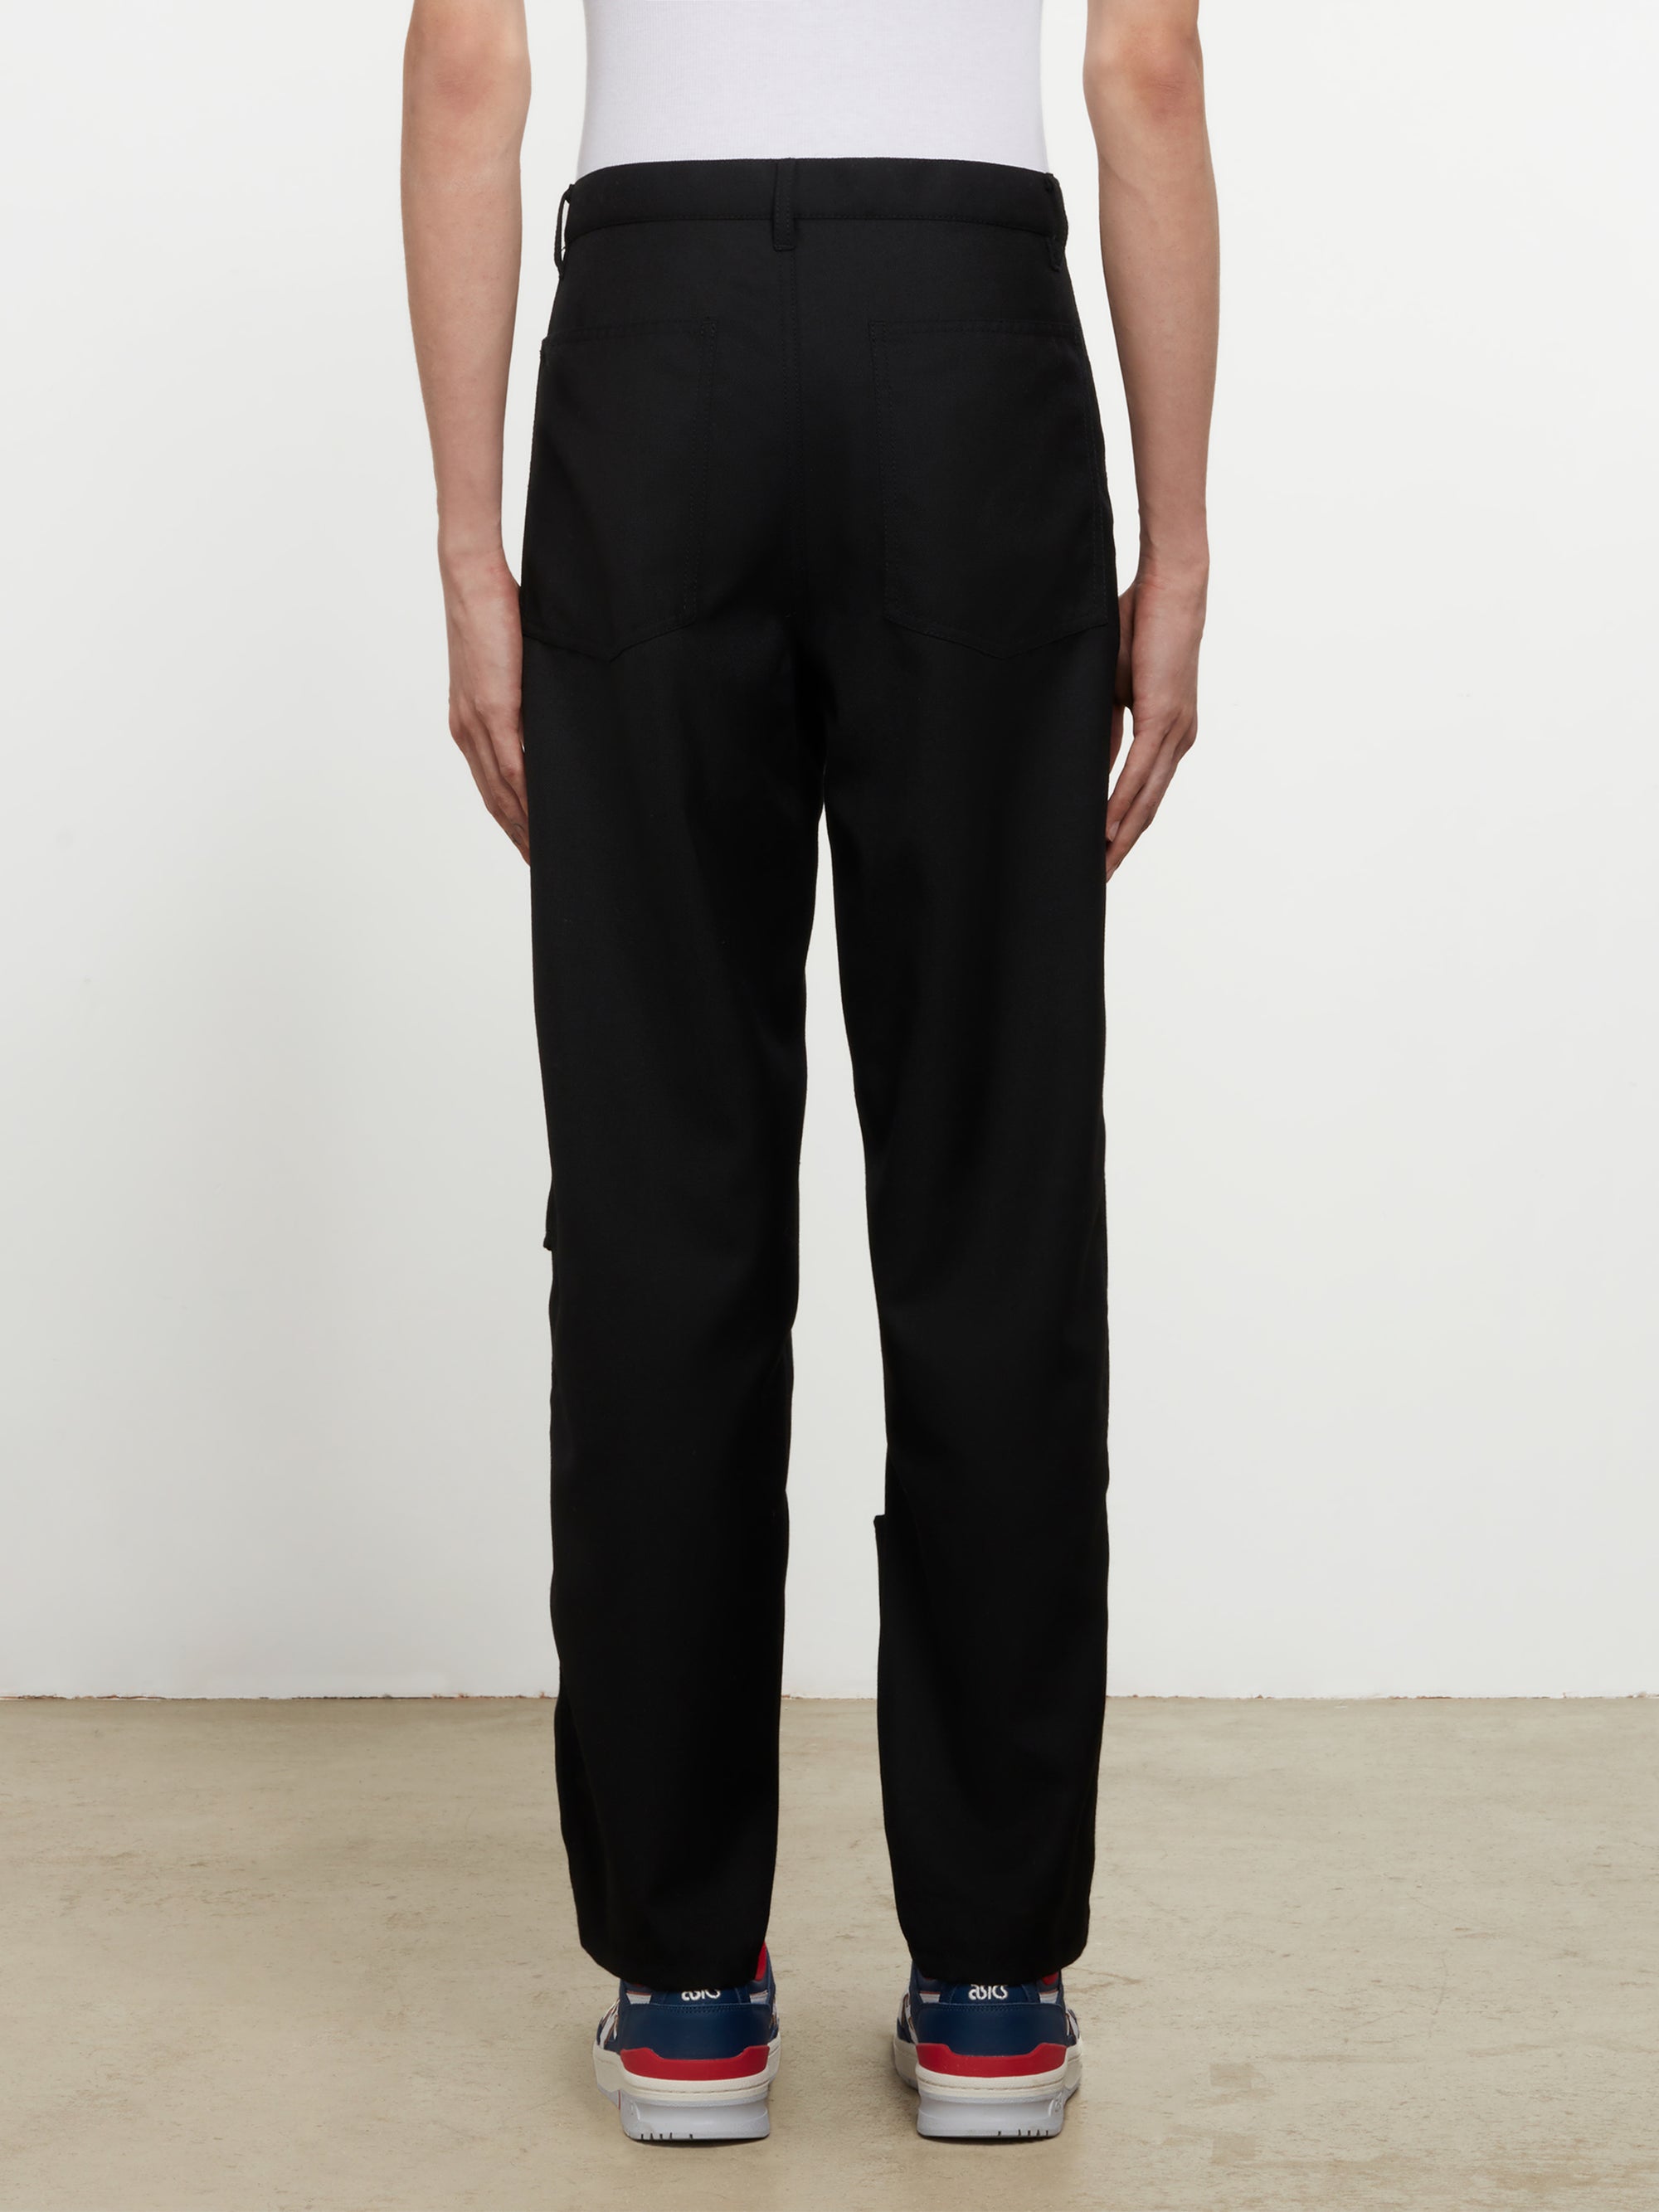 CDG Shirt - Men’s Panelled Pants - (Black) view 3